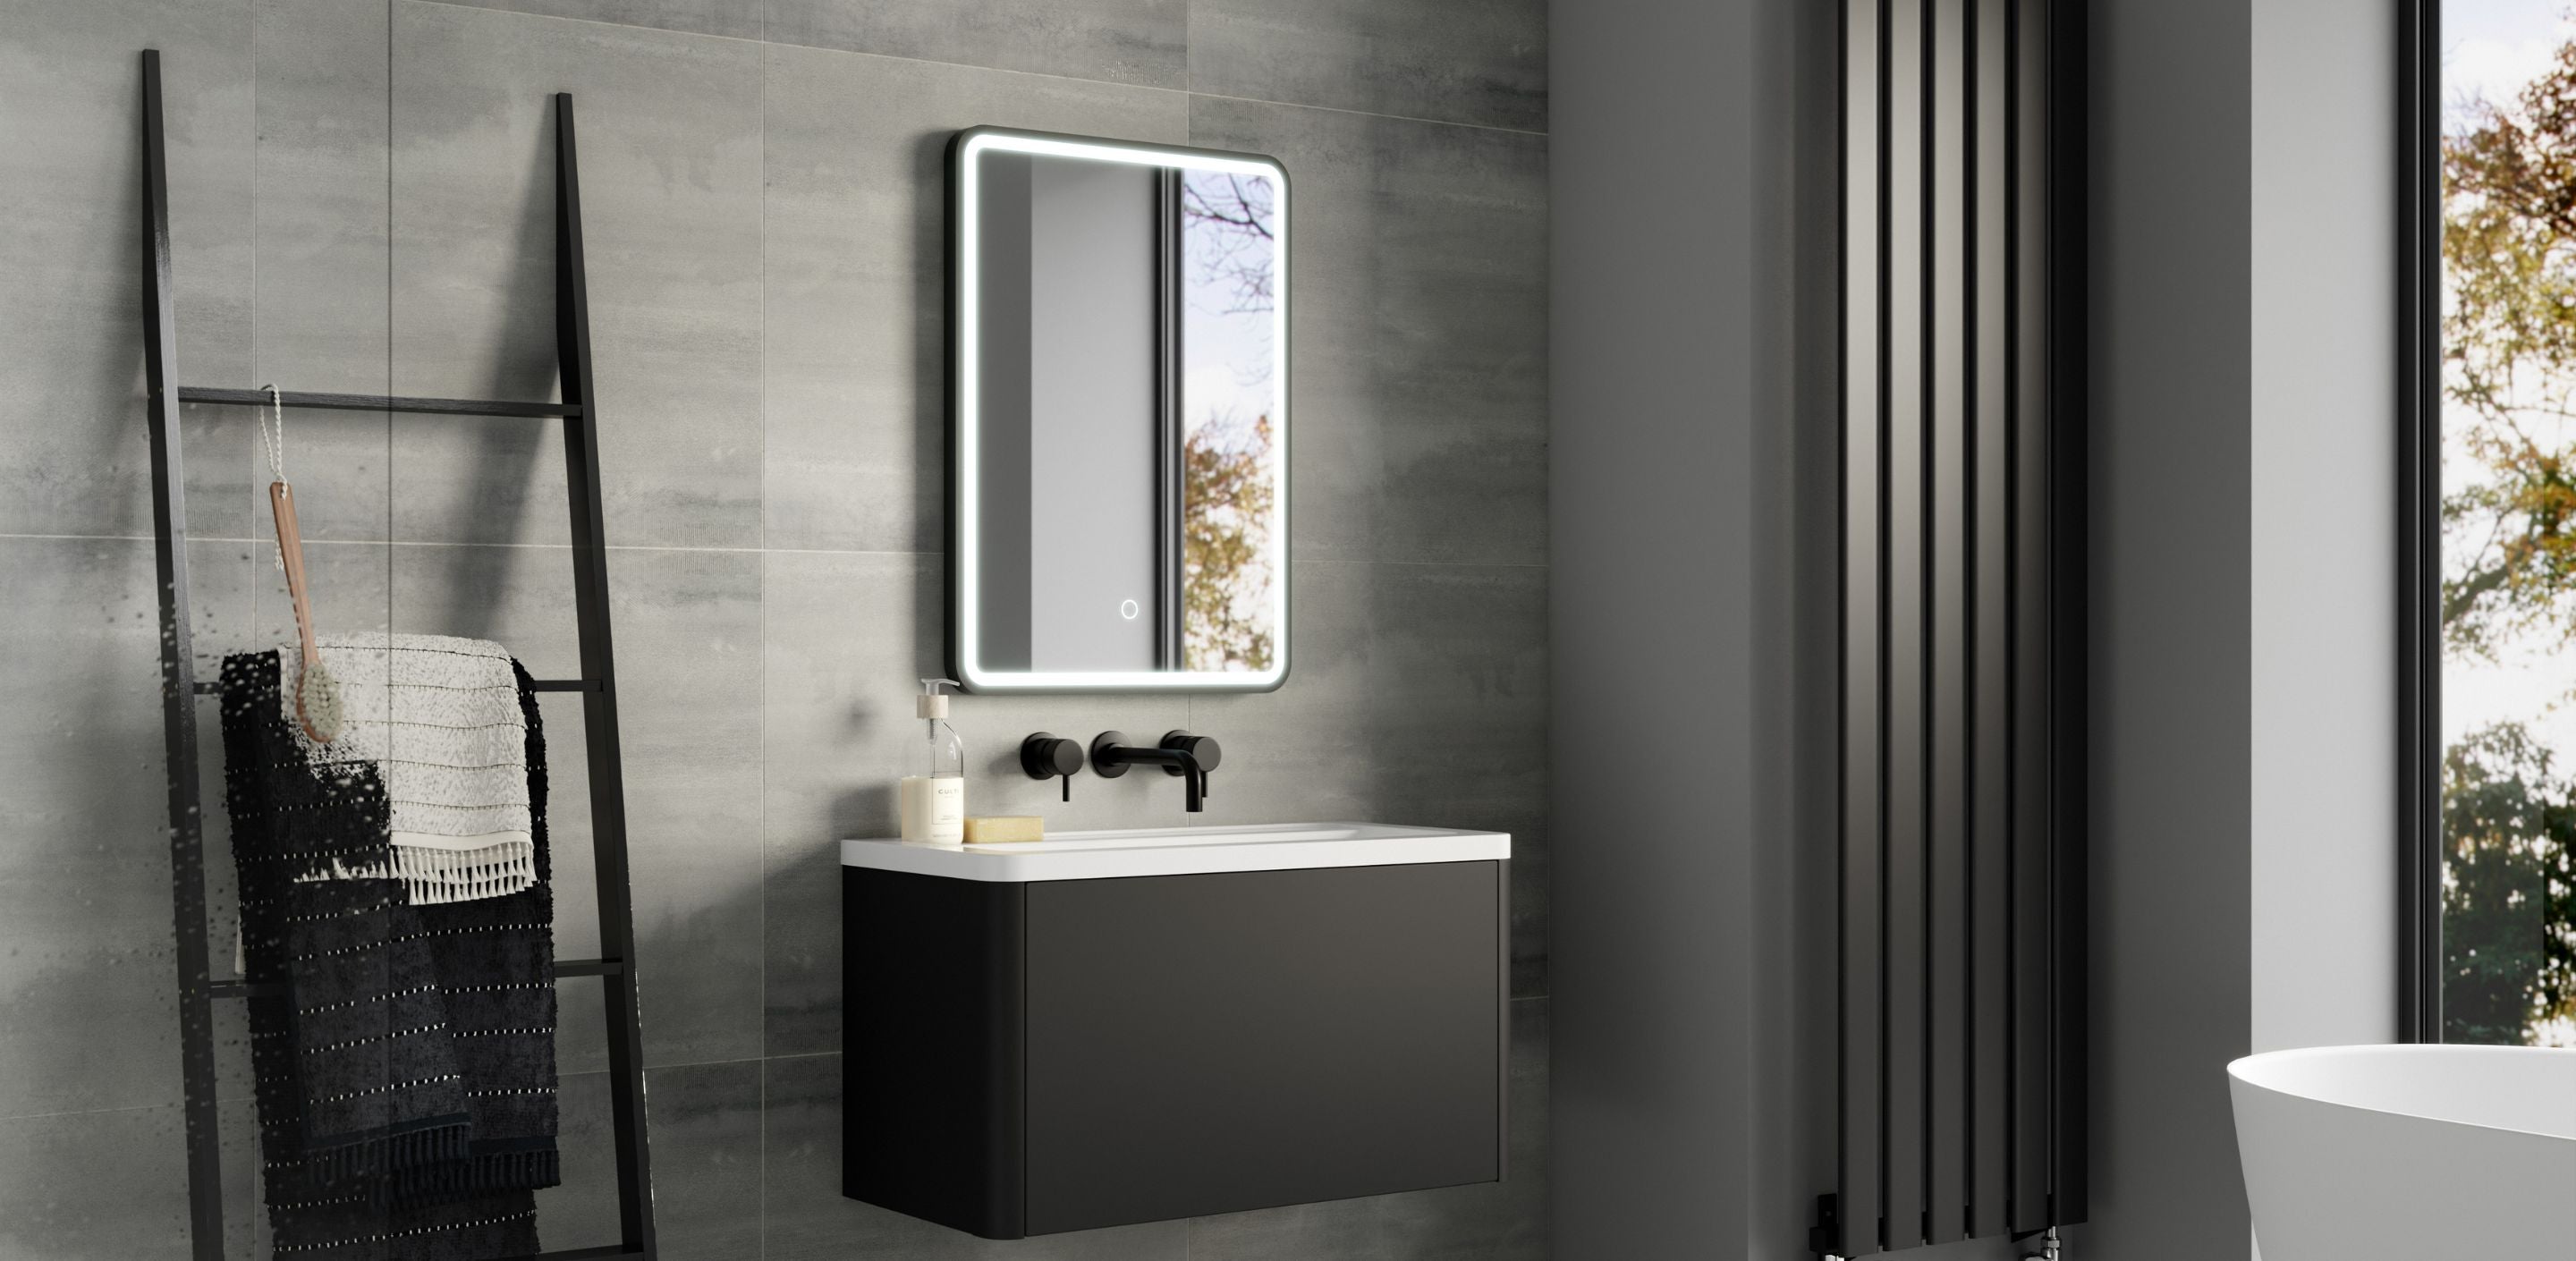 How to choose the best bathroom mirror - Pebble Grey